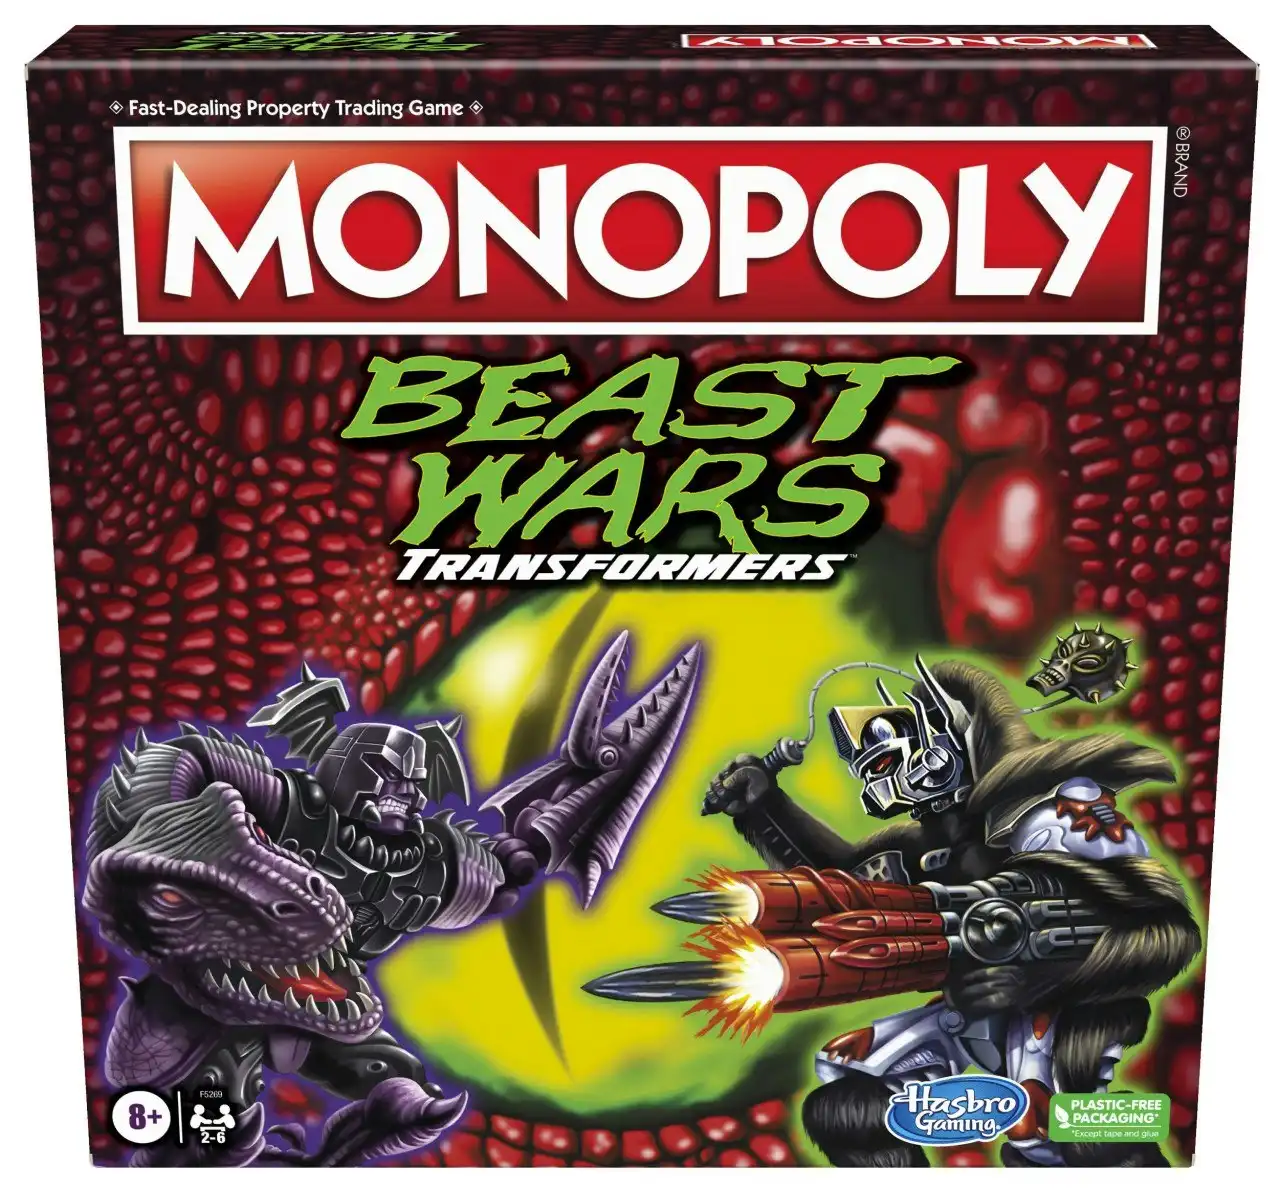 Monopoly Beast Wars Transformers